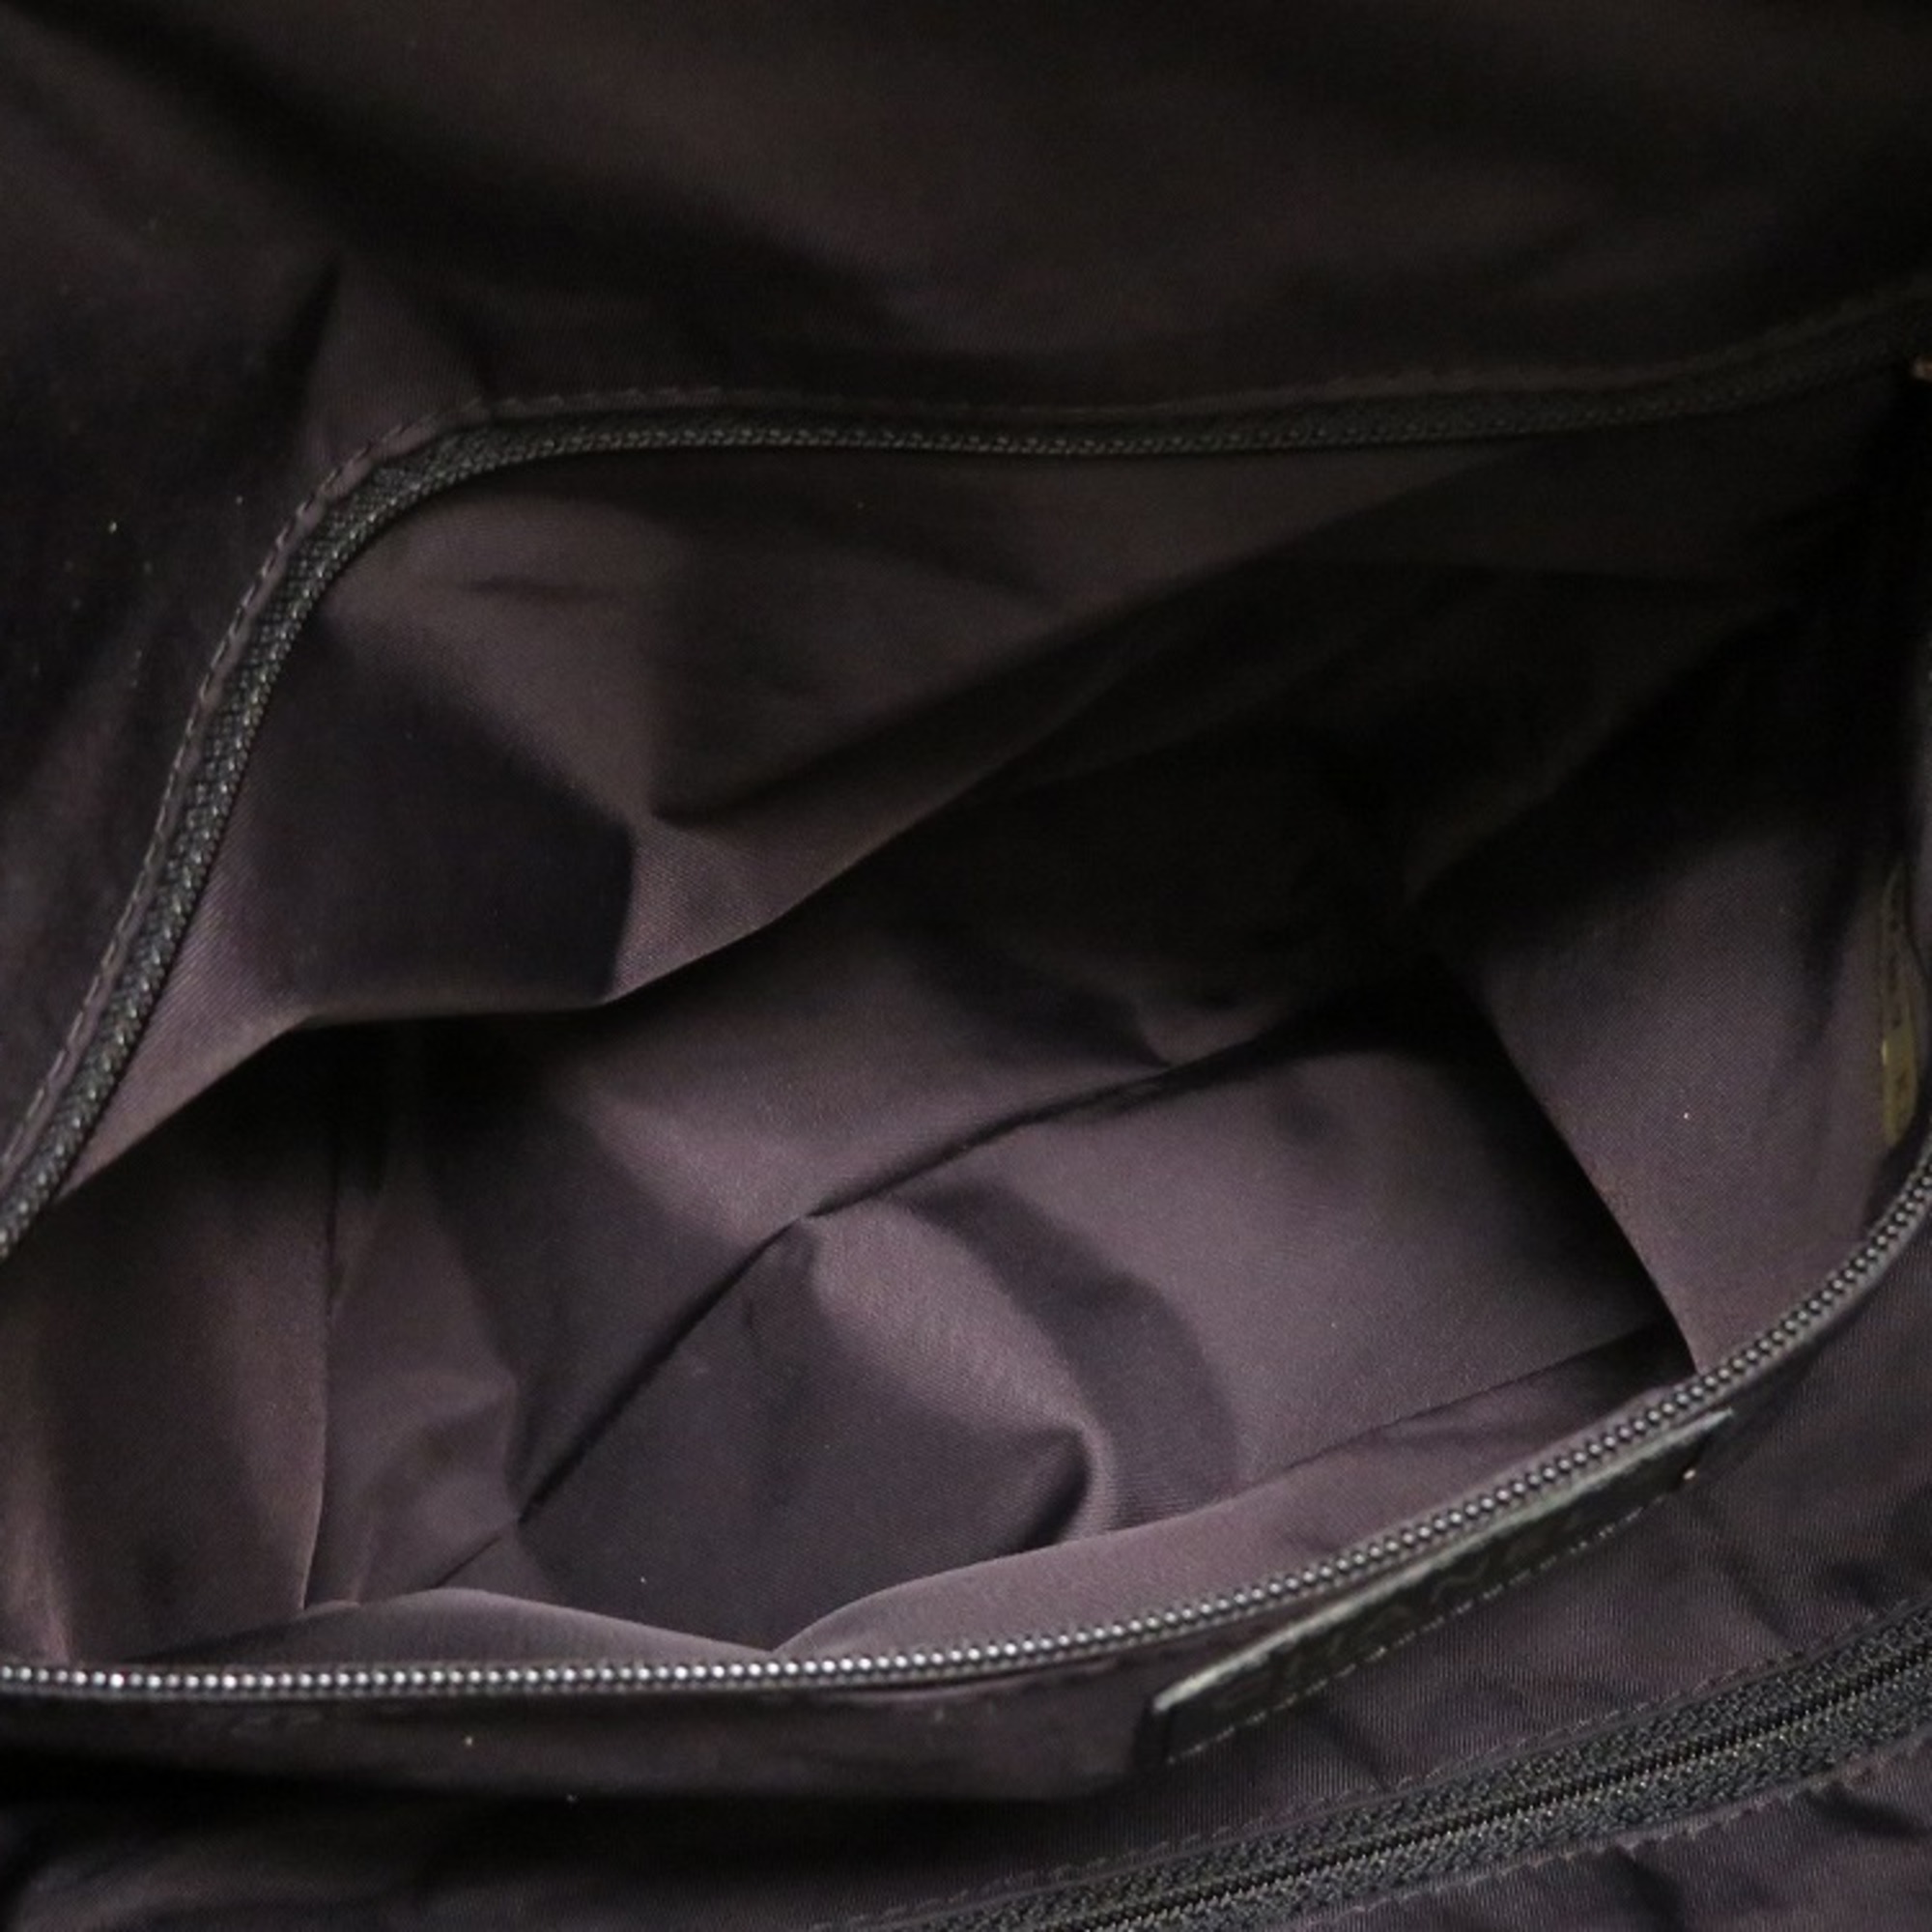 Chanel New Travel Line Unisex Canvas Tote Bag Black